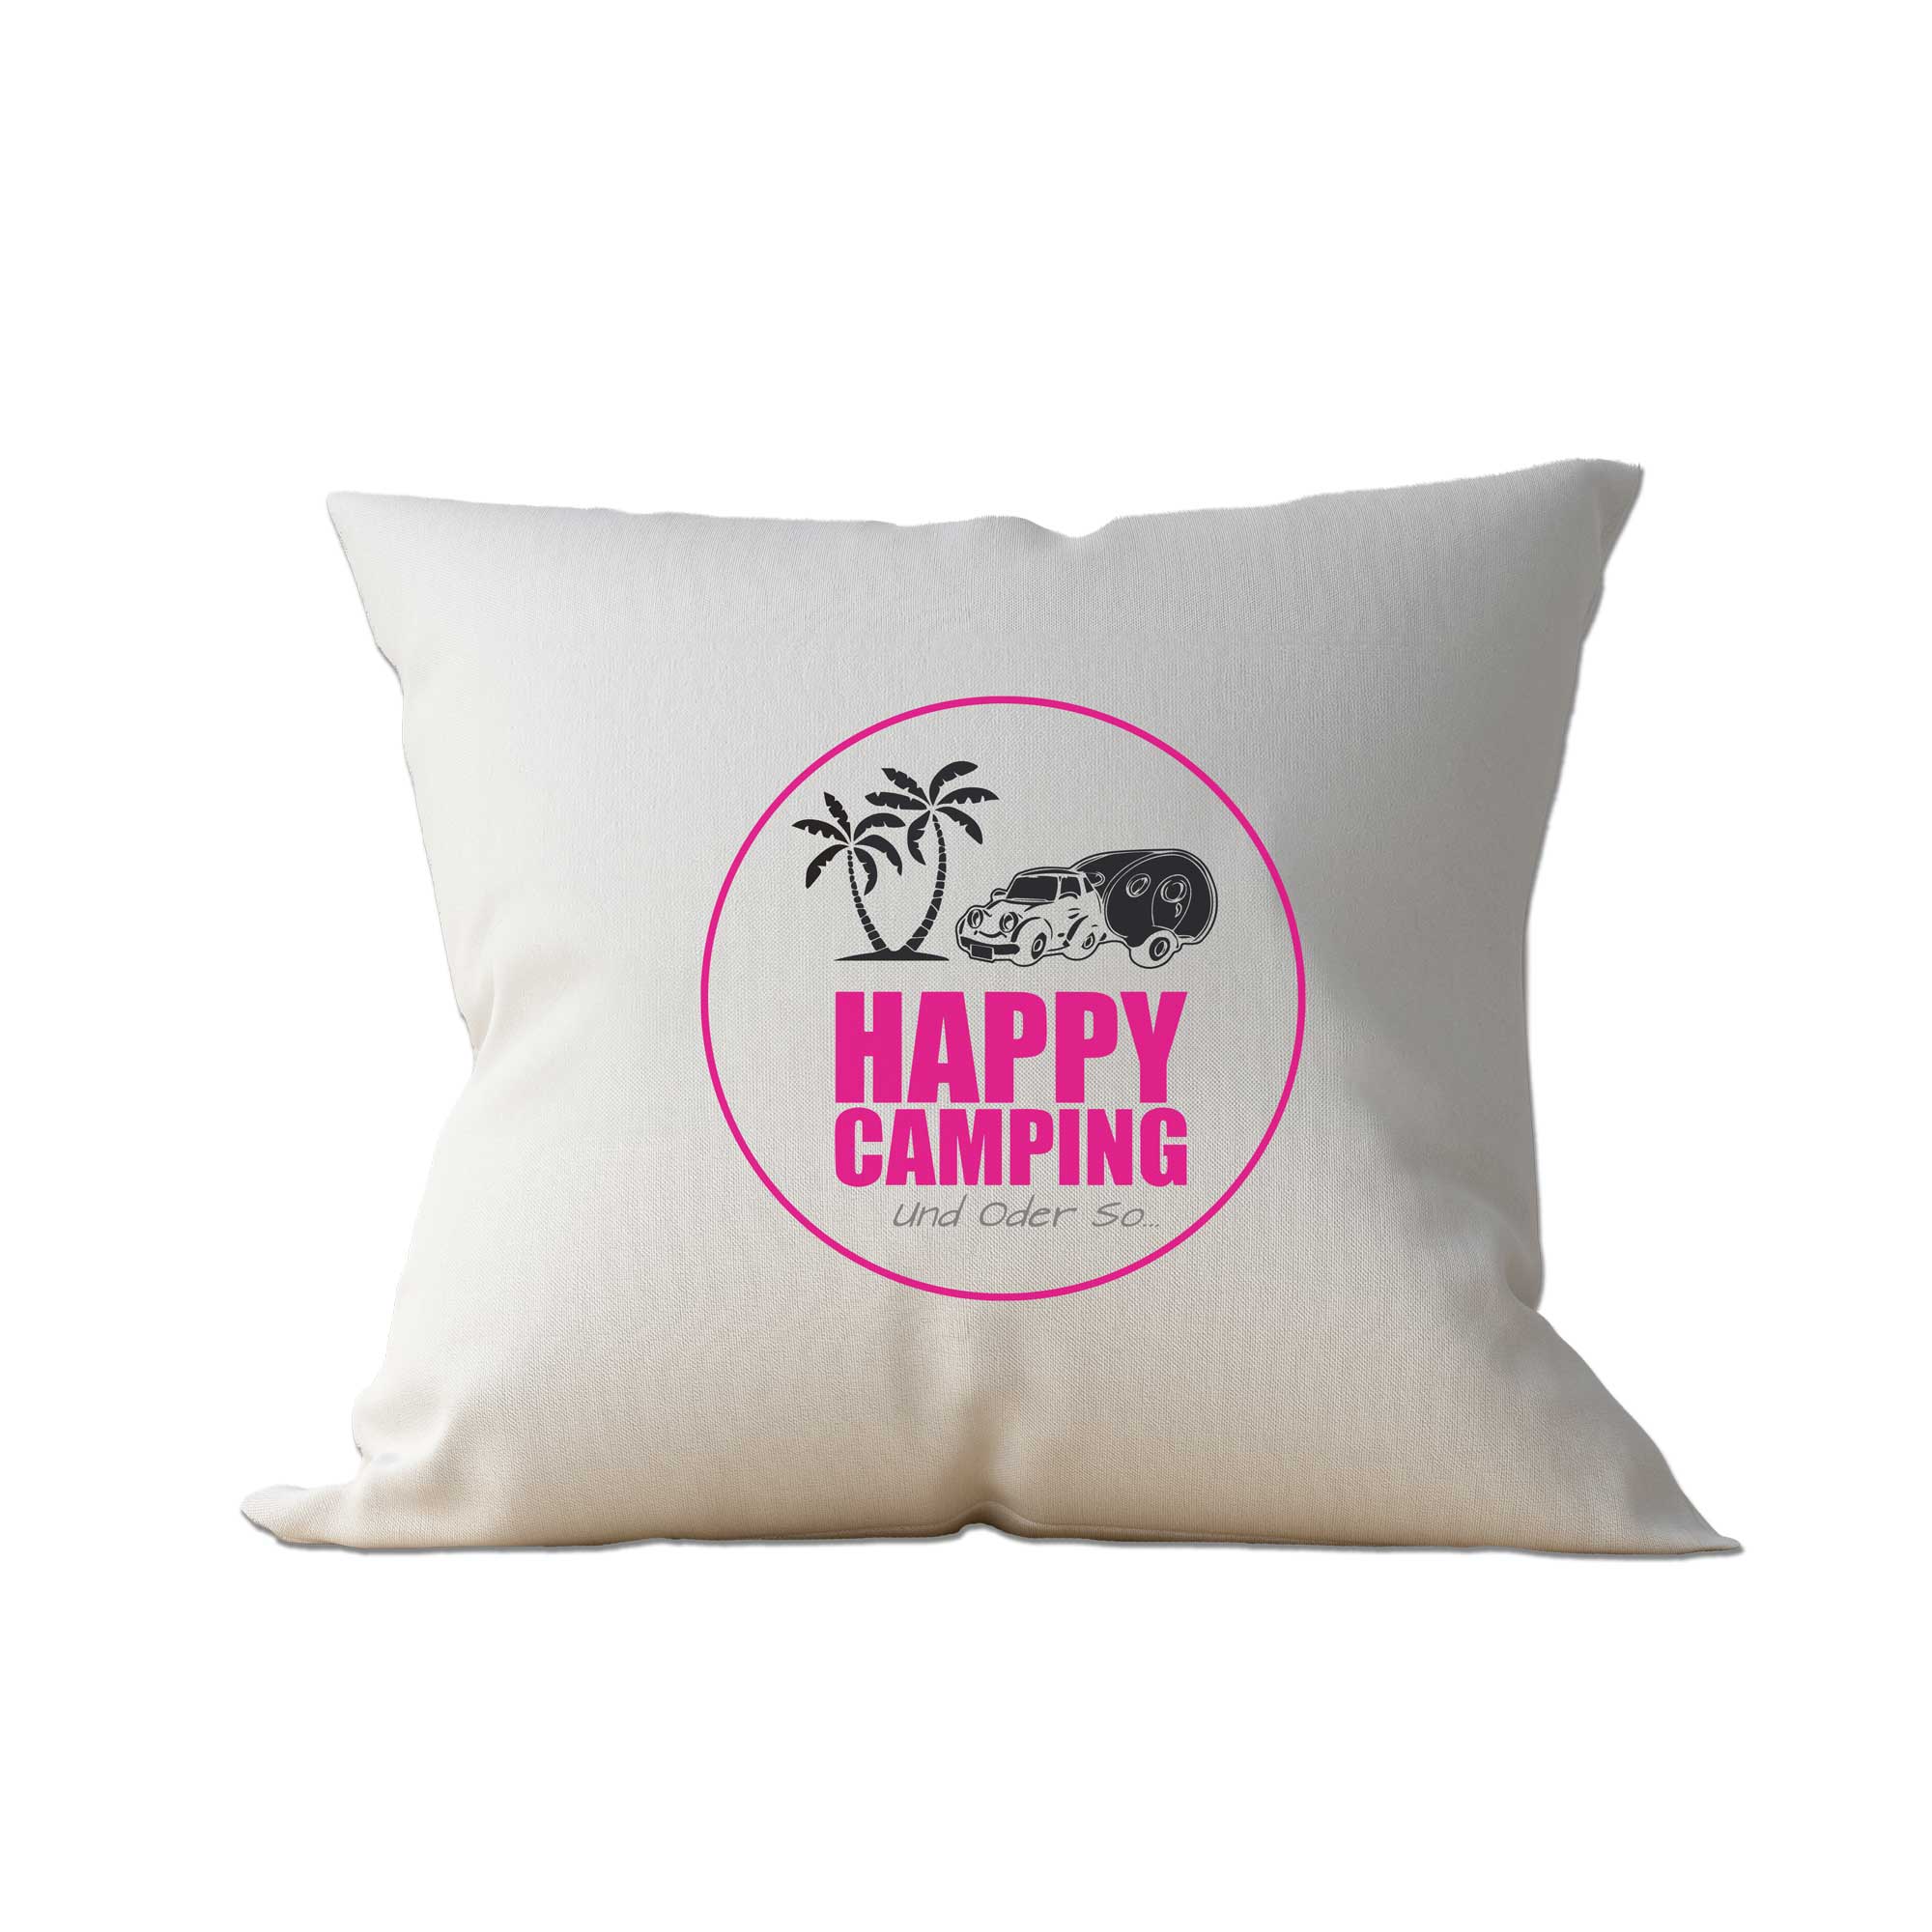 HAPPY CAMPING cushion